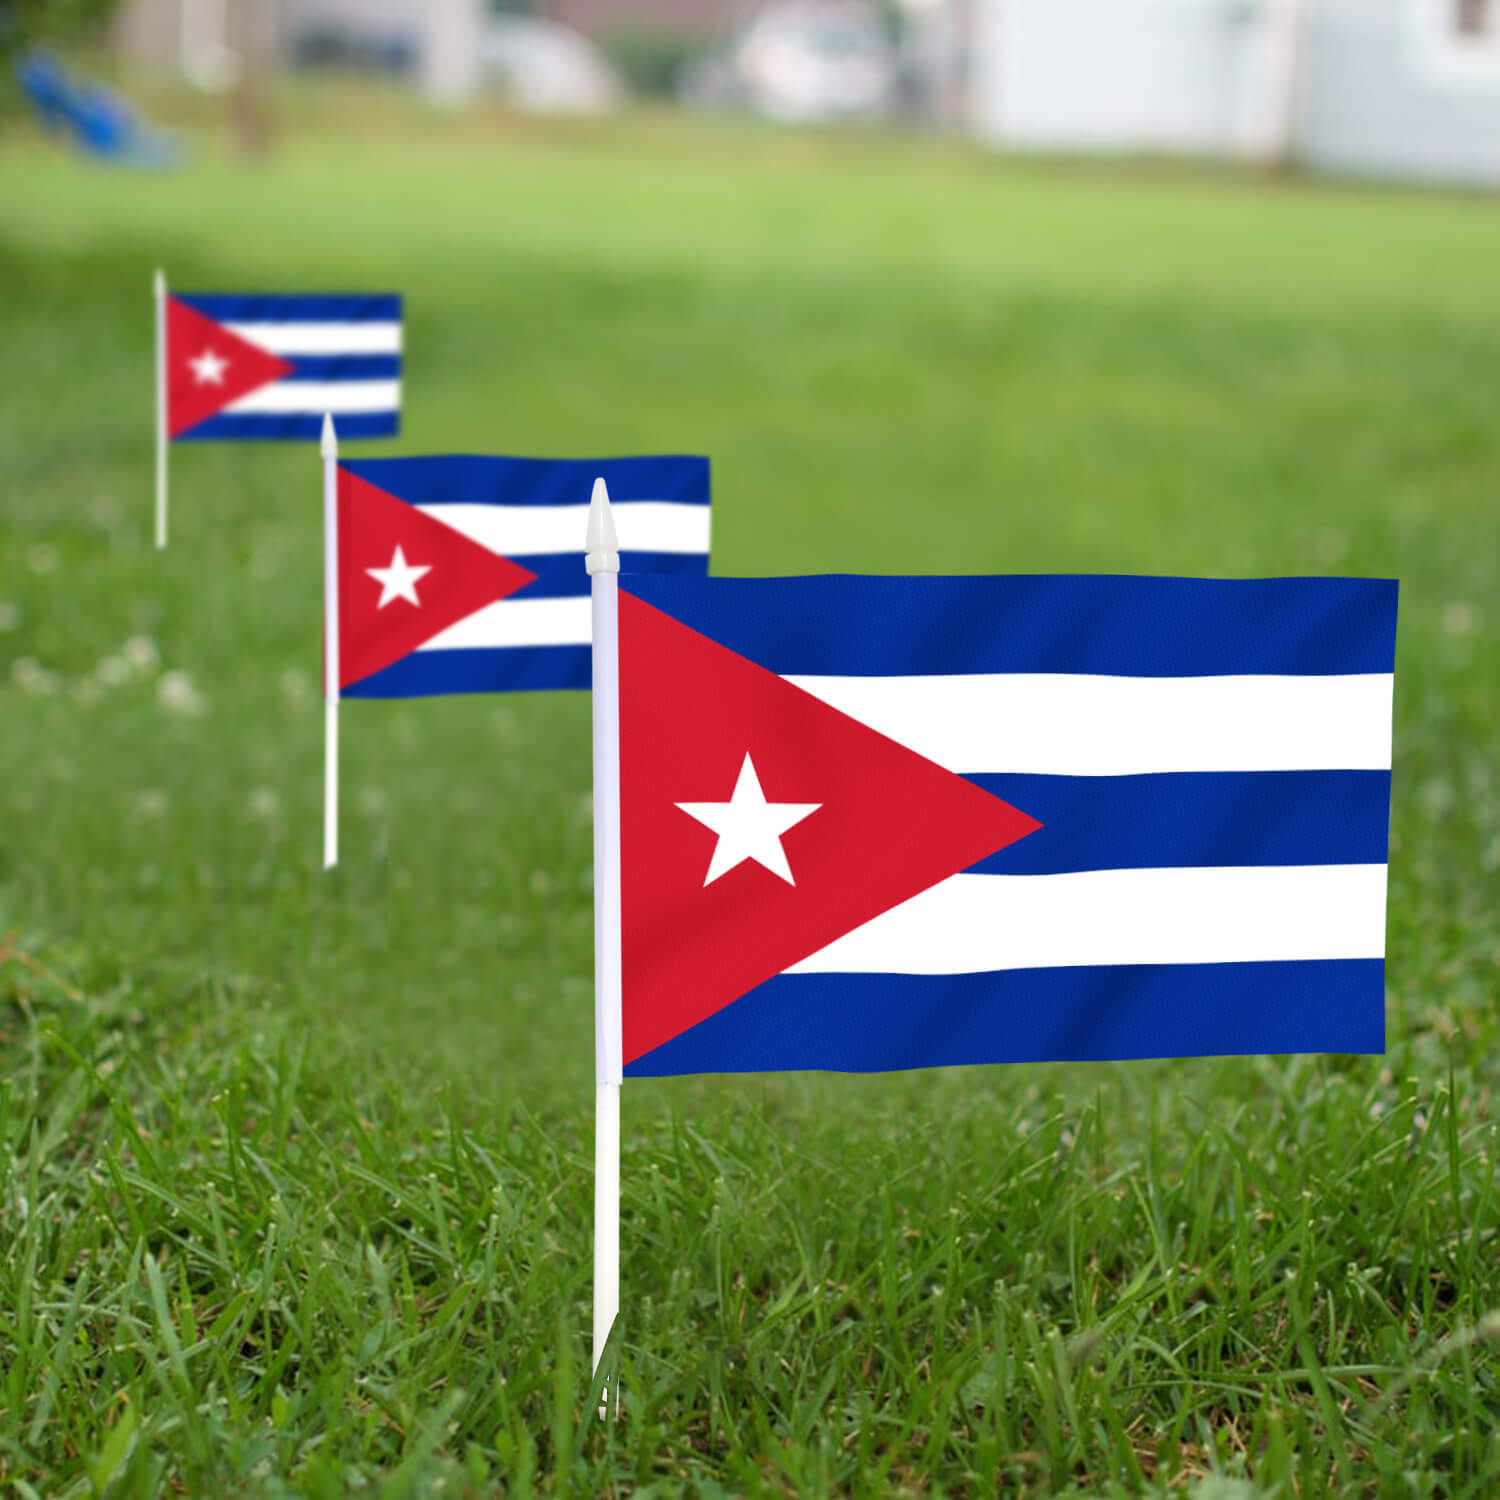 Cuba Flag, Cuban Flag from Flags Unlimited